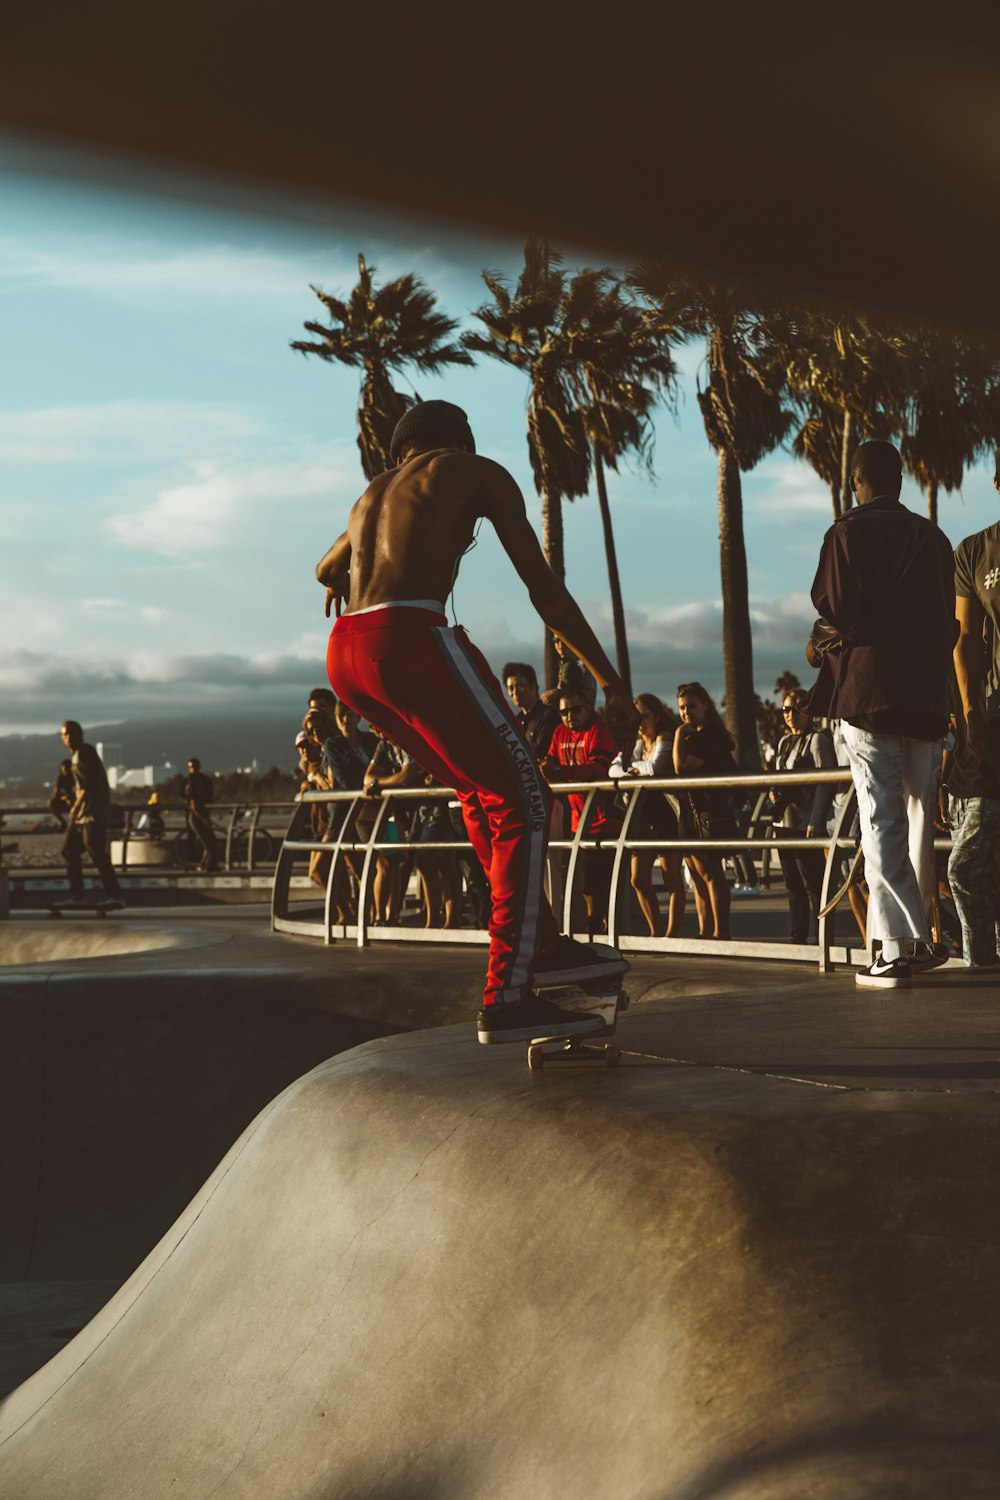 man skateboarding surrounded people at daytime